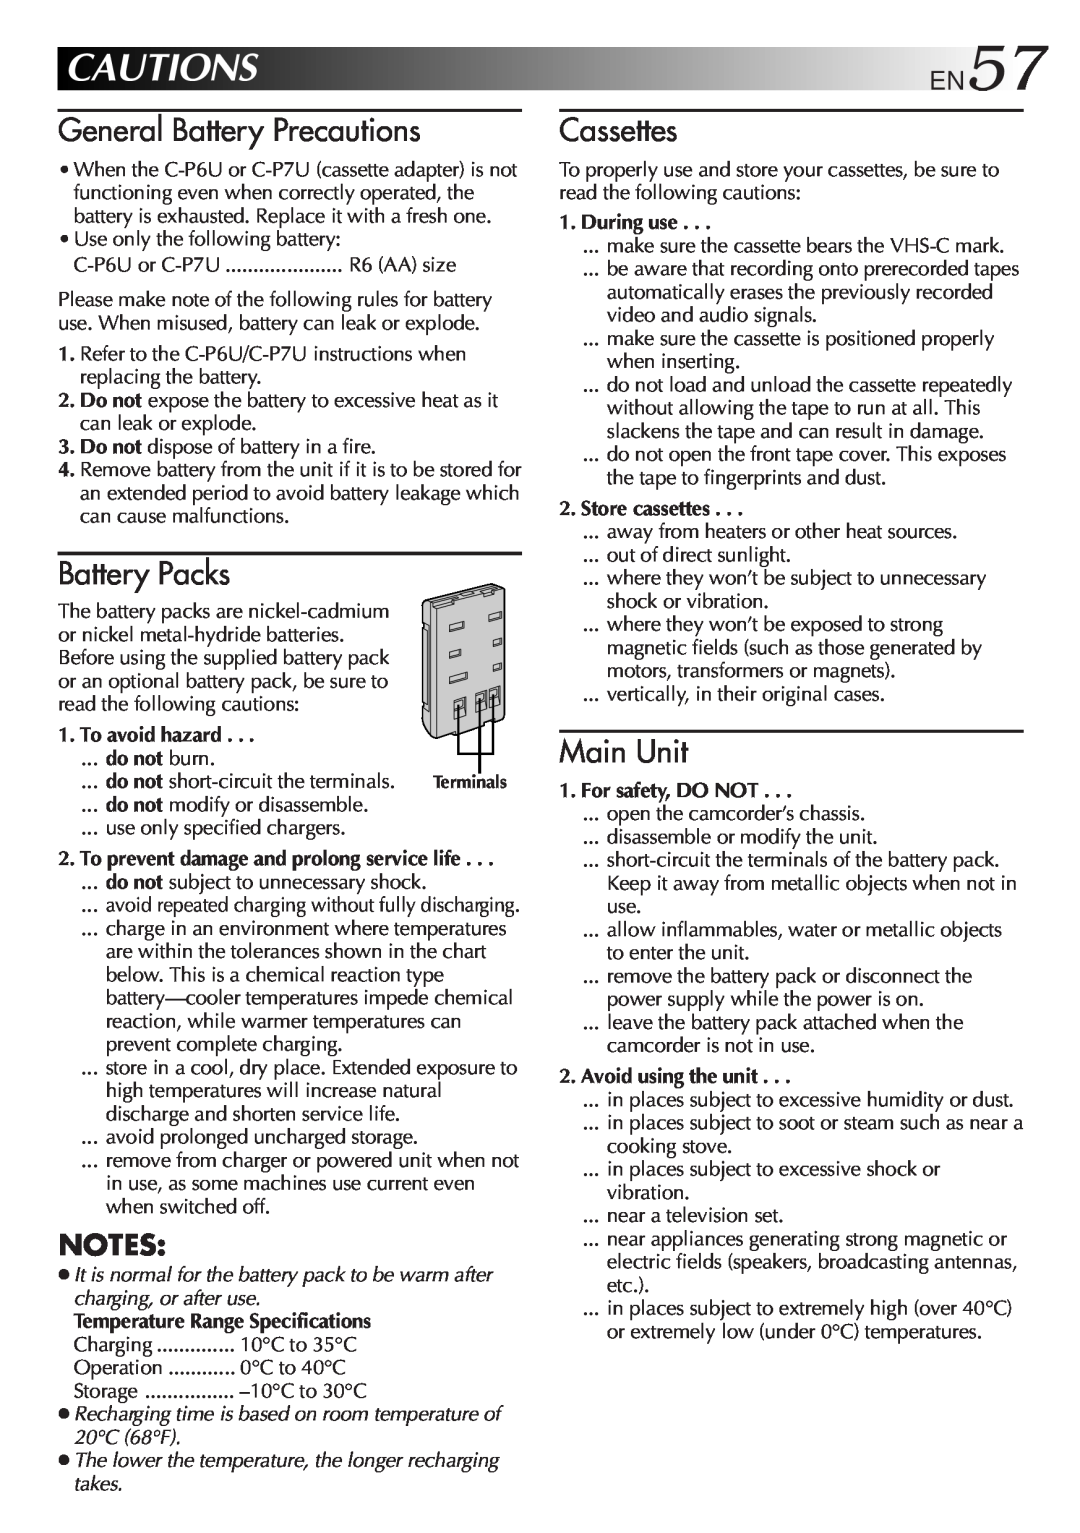 JVC GR-FXM15 Cautions, General Battery Precautions, Cassettes, Battery Packs, Main Unit, EN57, To avoid hazard, During use 